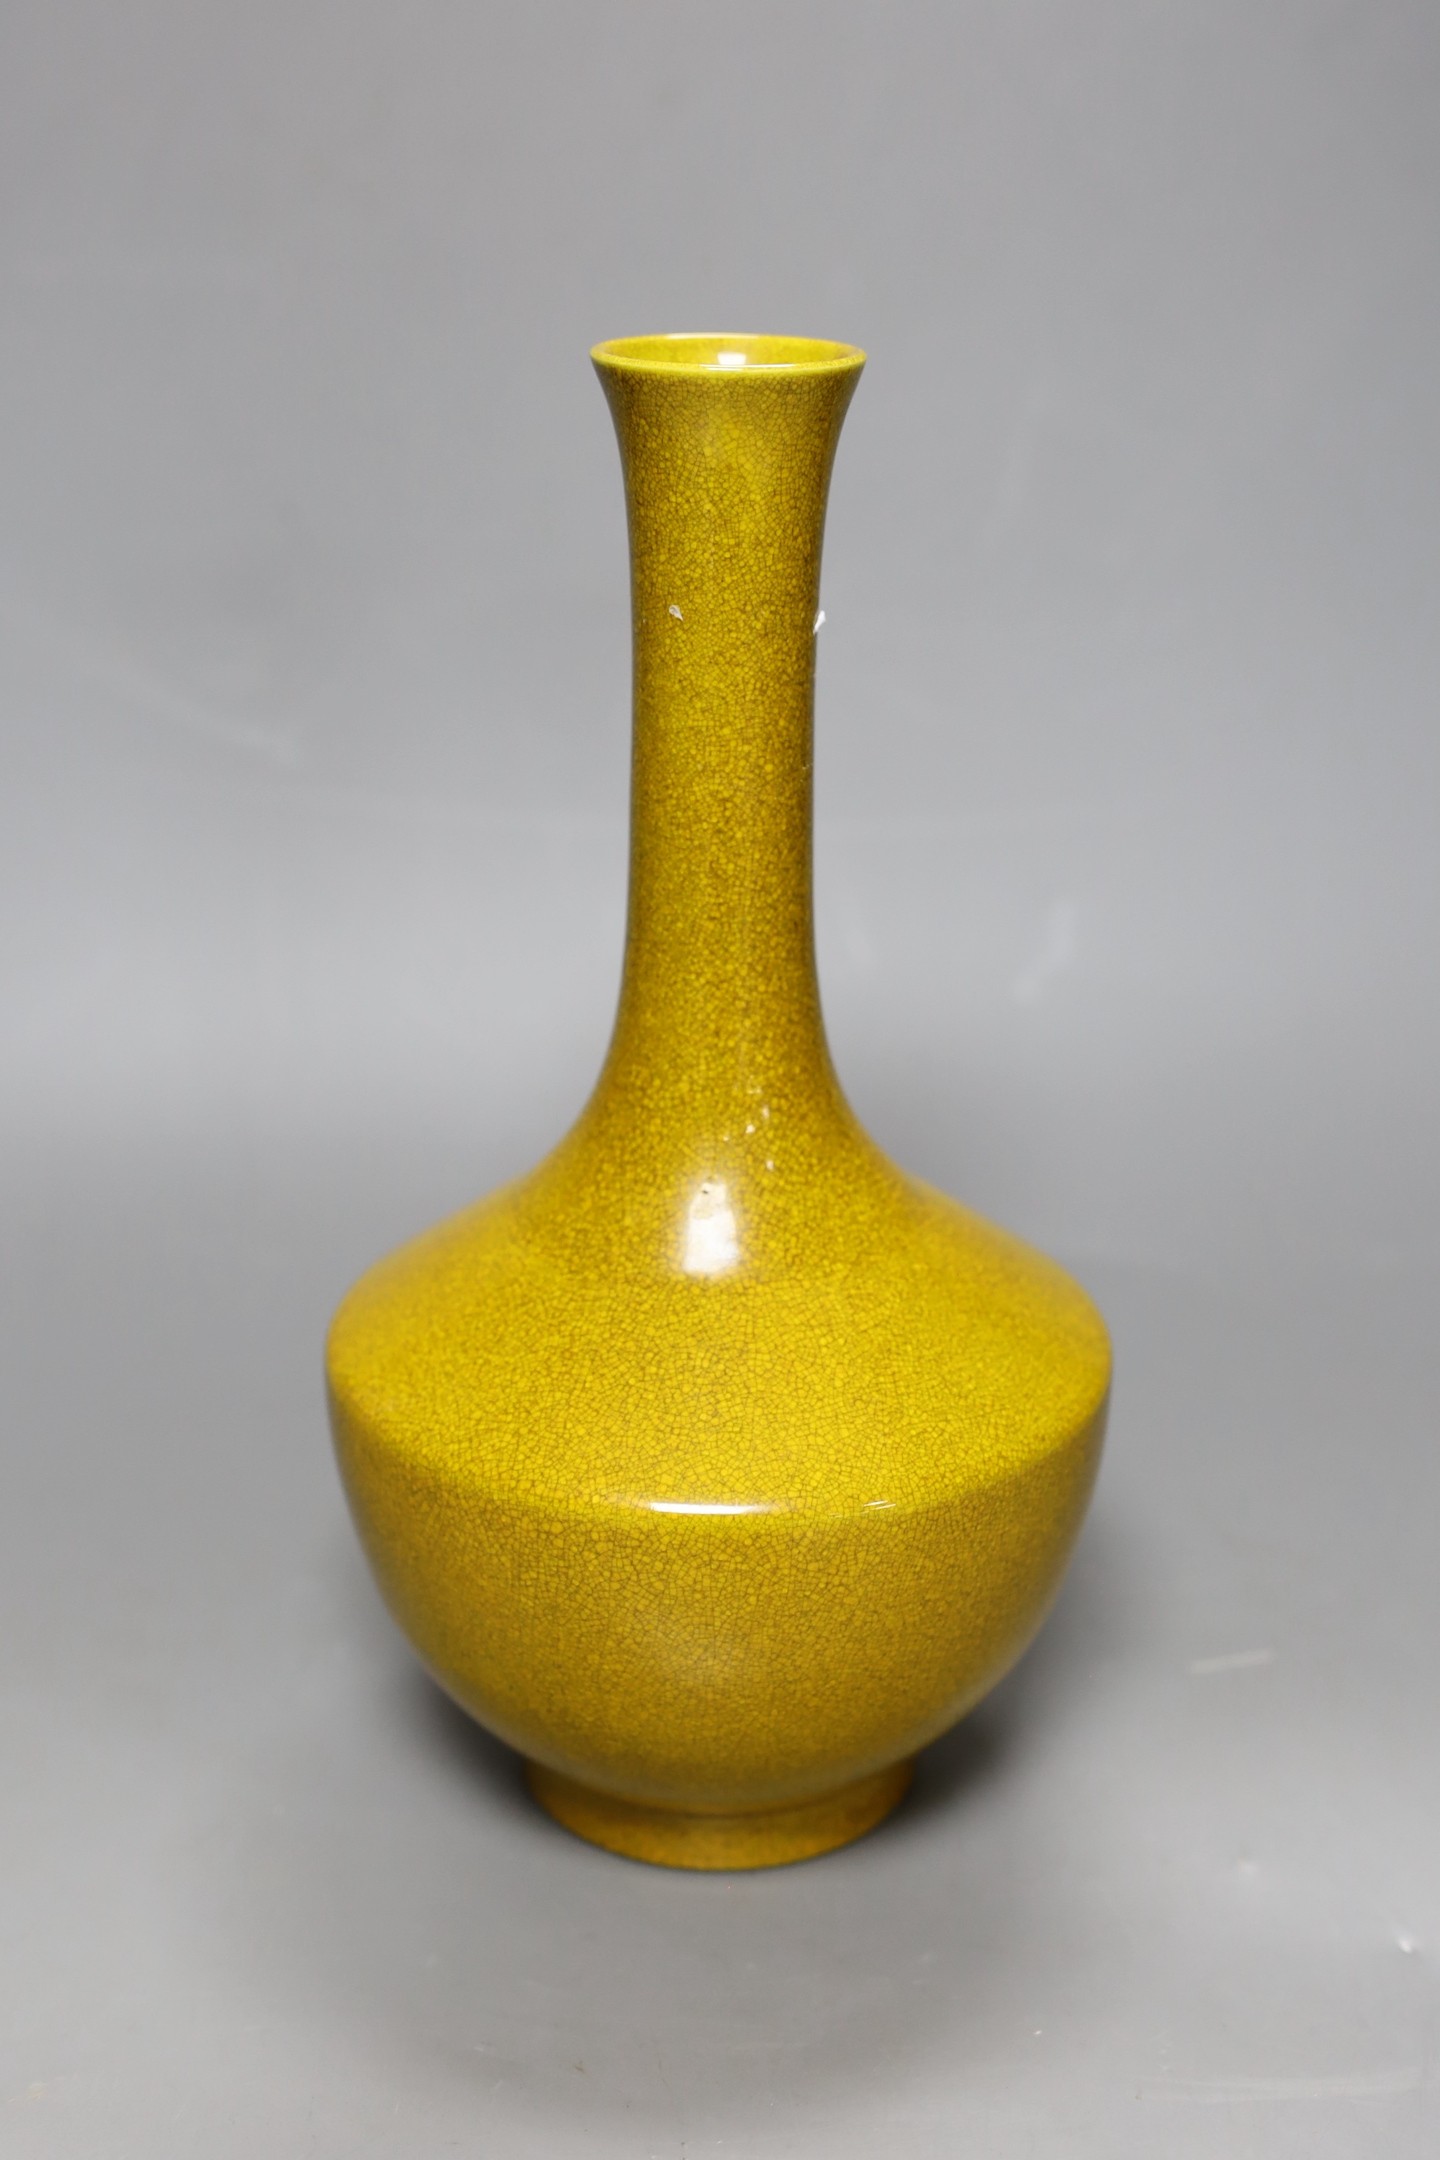 A Chinese yellow crackle glaze bottle vase, 26cm